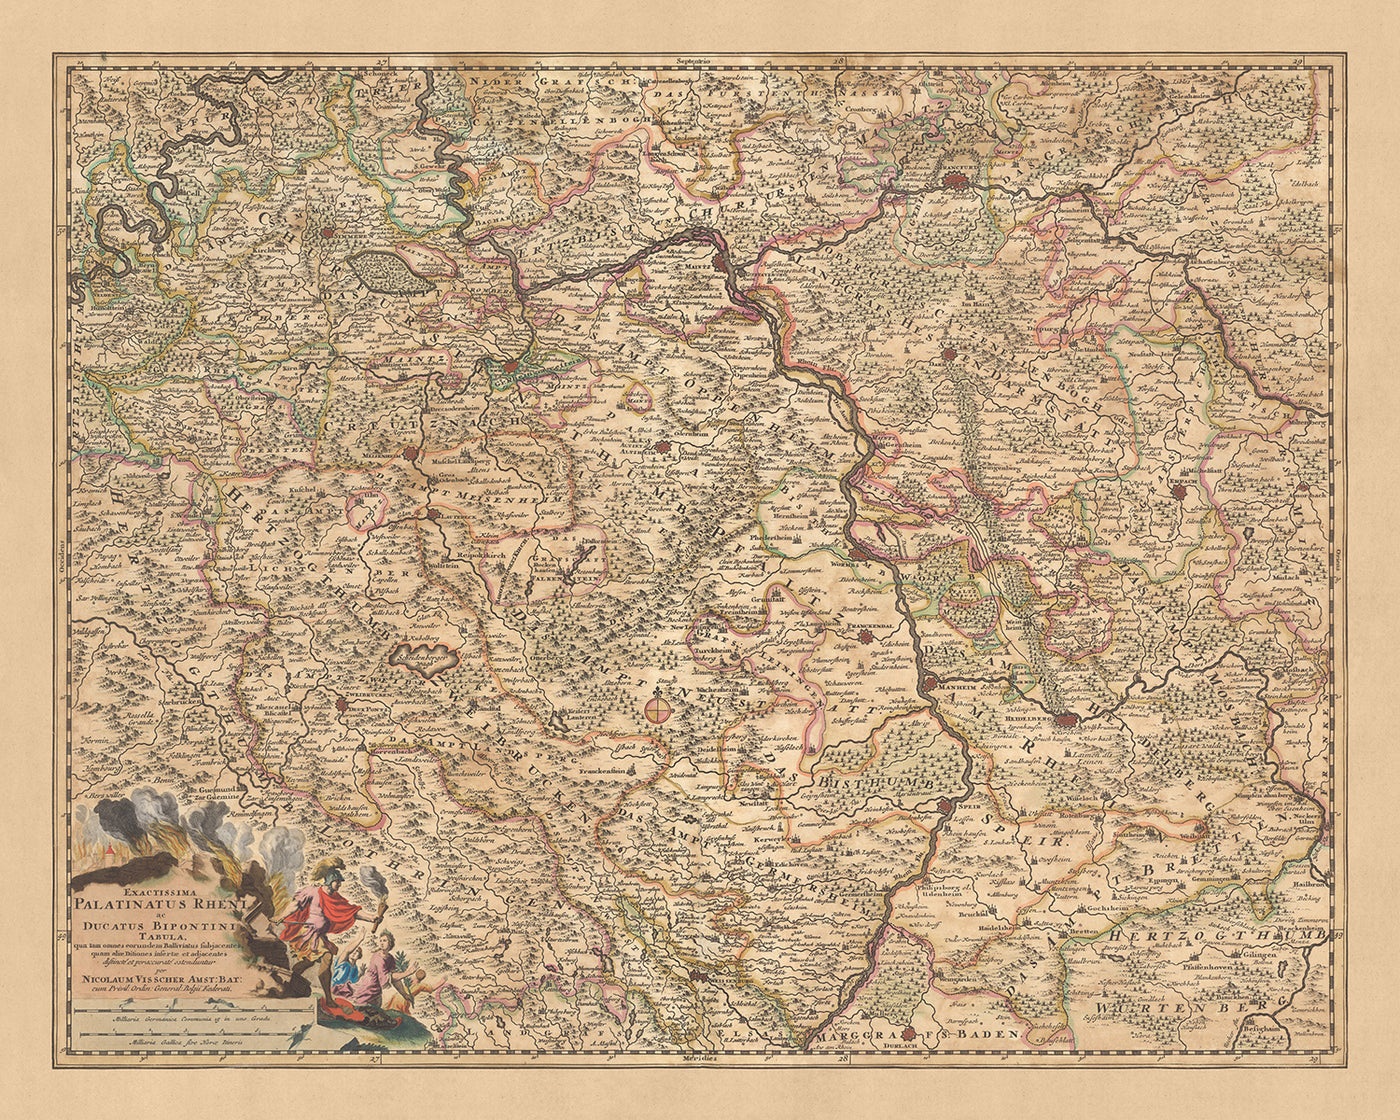 Mapa antiguo del Rin Palatinado y Ducado de Zweibrücken, Visscher, 1690: Frankfurt, Mannheim, Saarbrücken, Mainz, Darmstadt